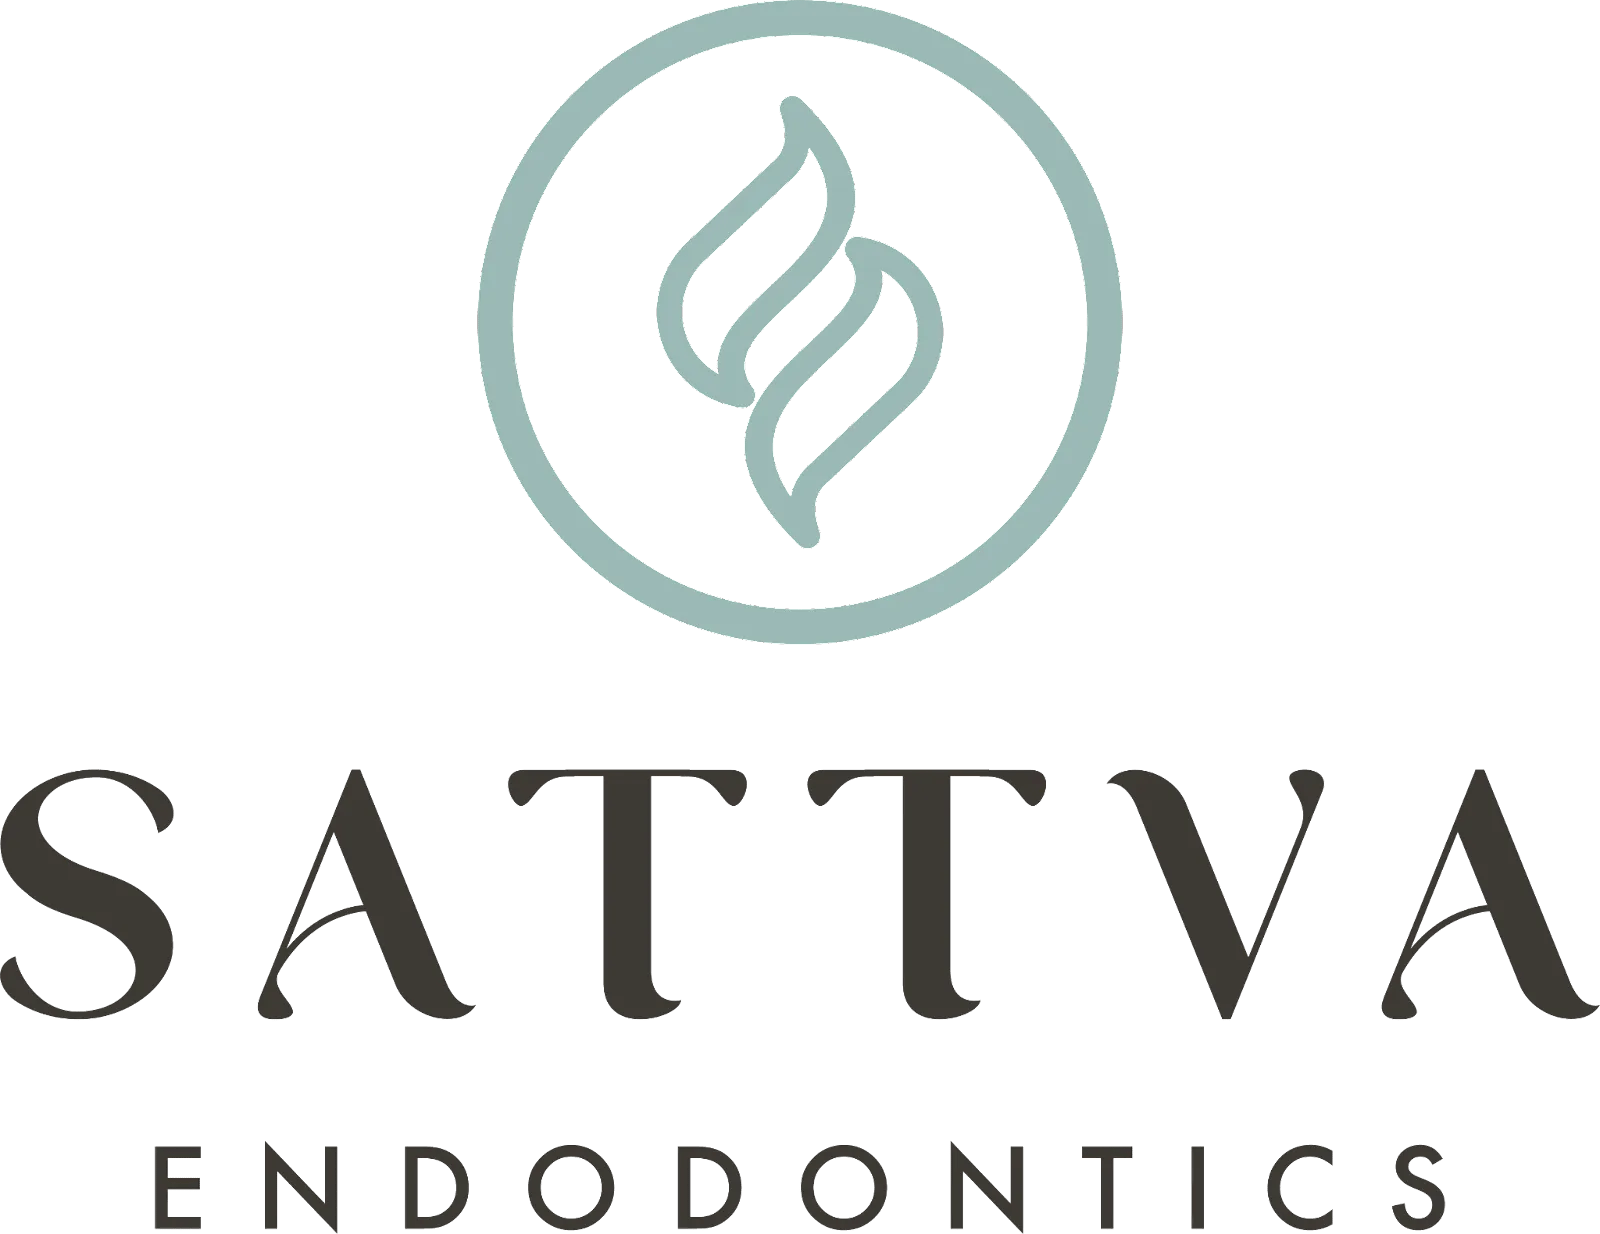 Logo of Sattva Endodontics featuring a stylized leaf within a circle above the text "Sattva Endodontics".